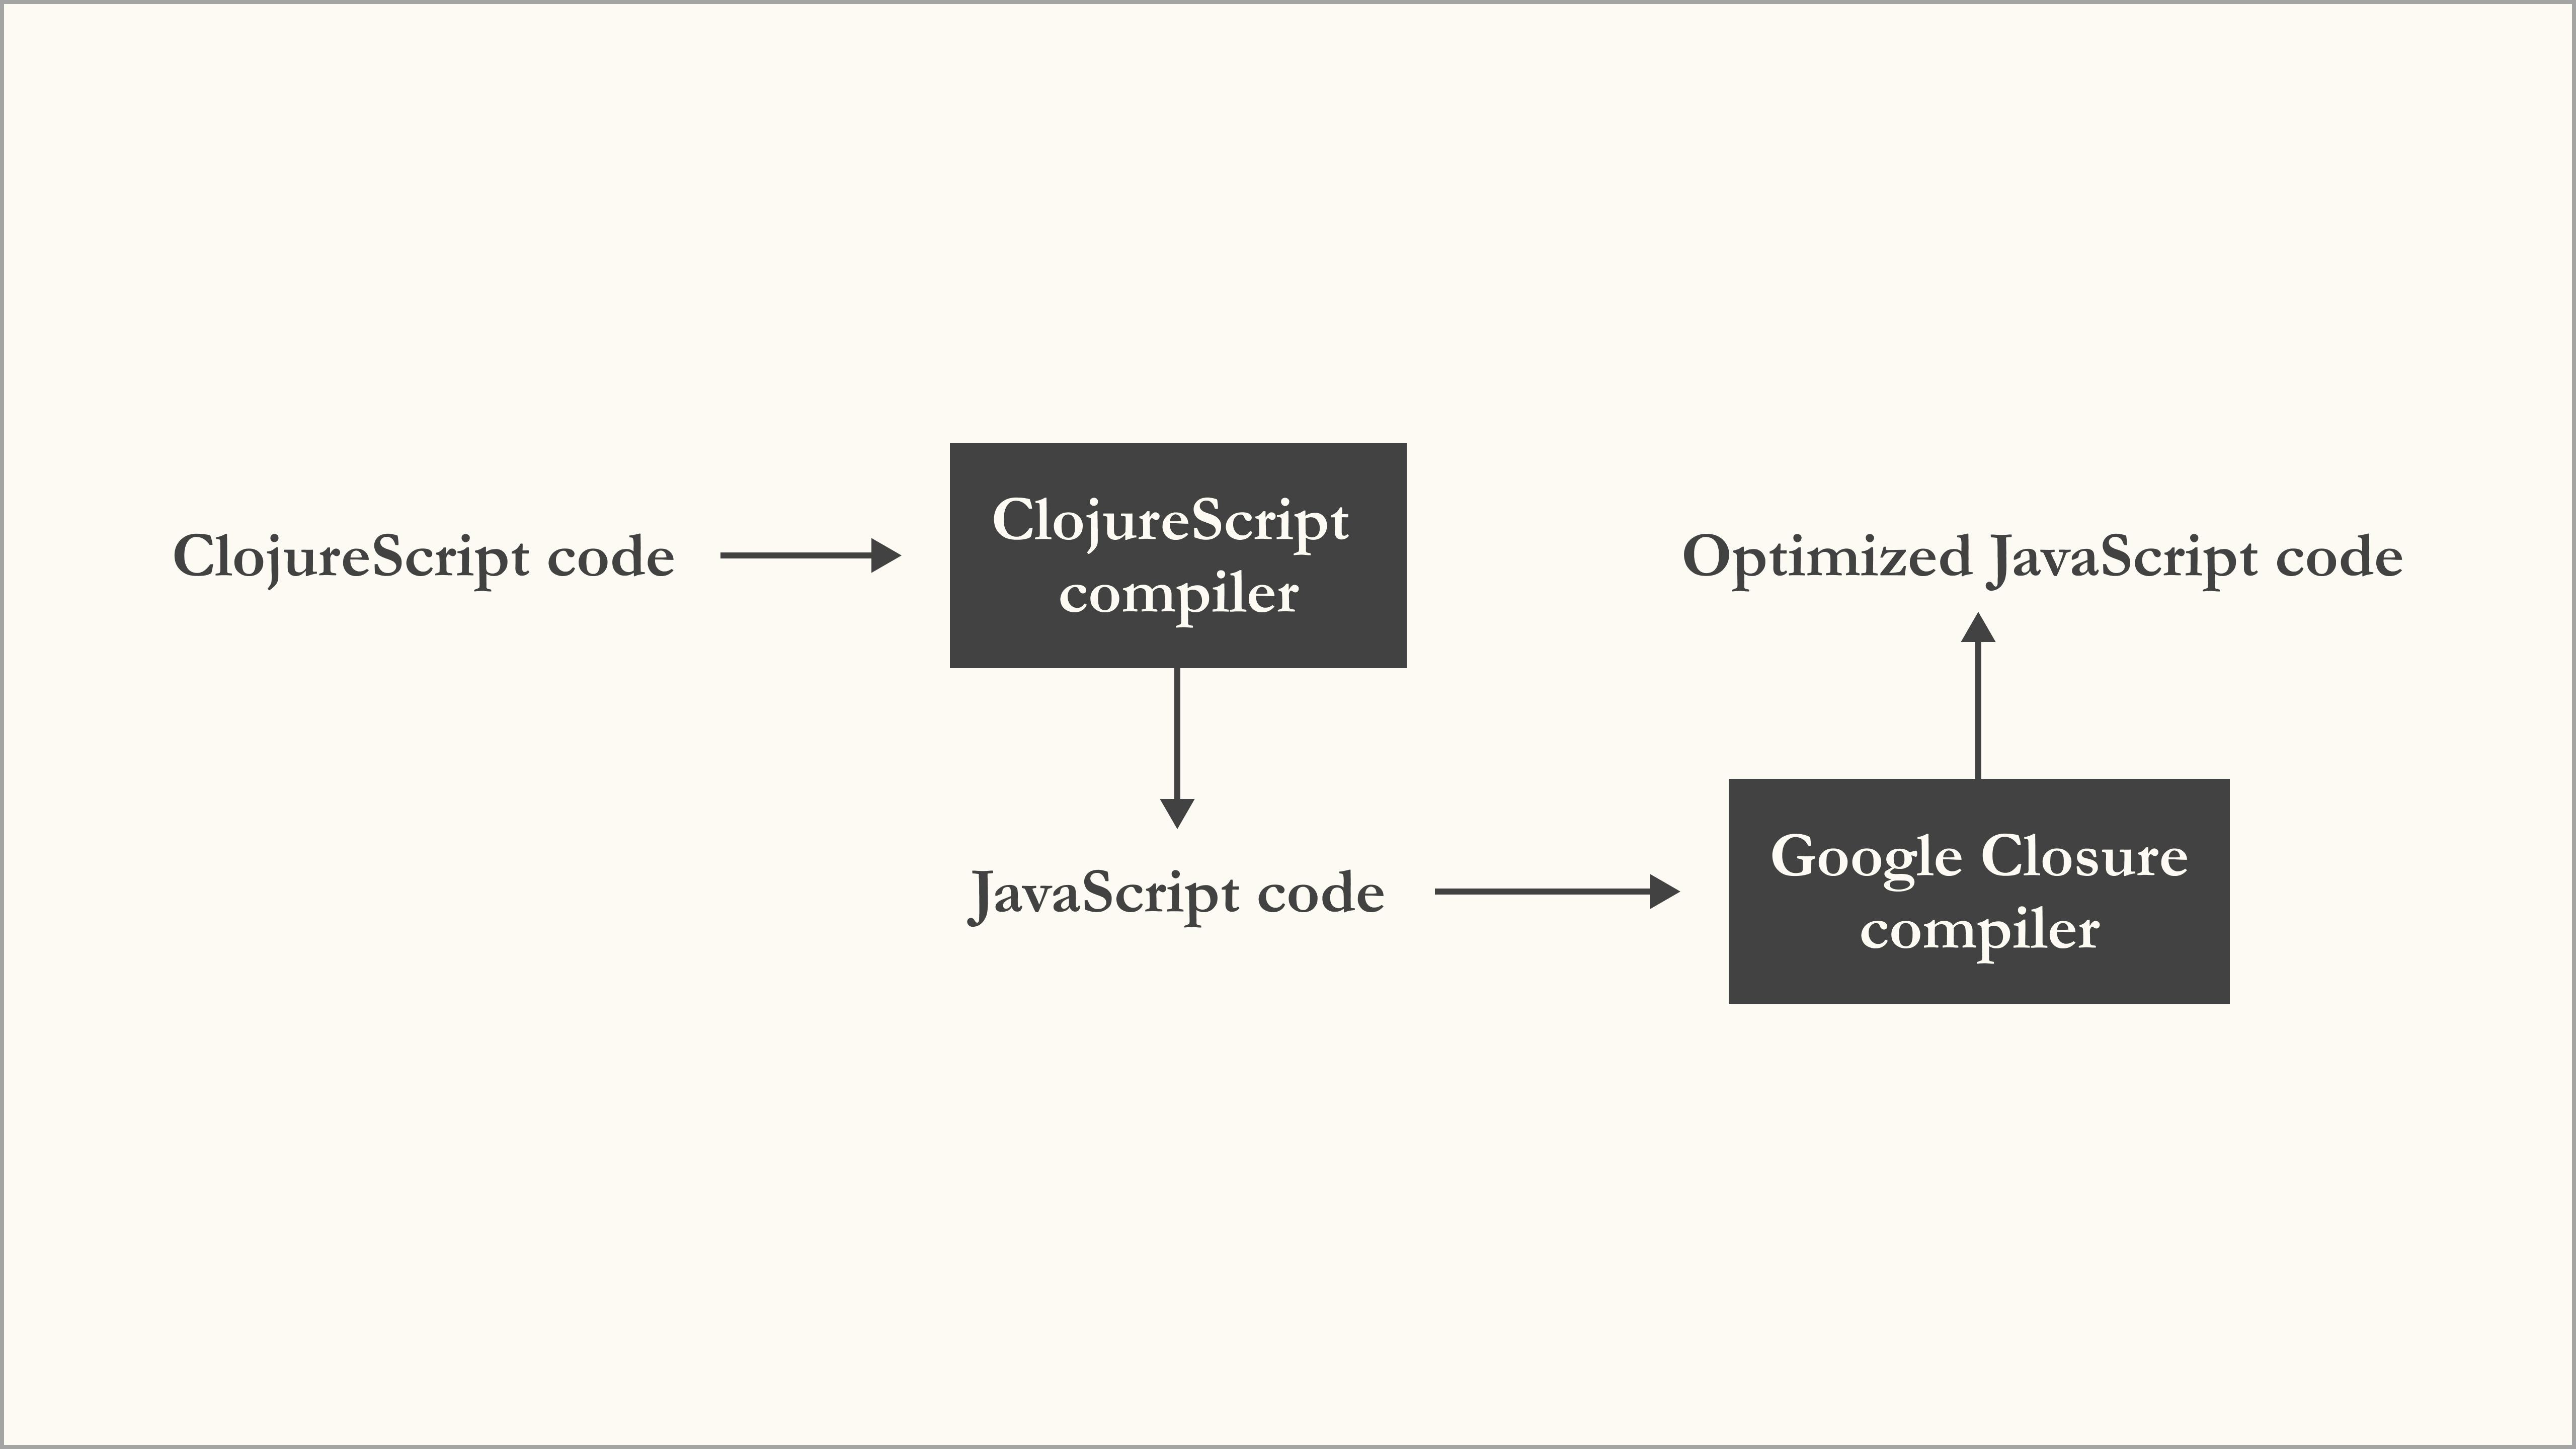 How ClojureScript compiles to optimized JavaScript code